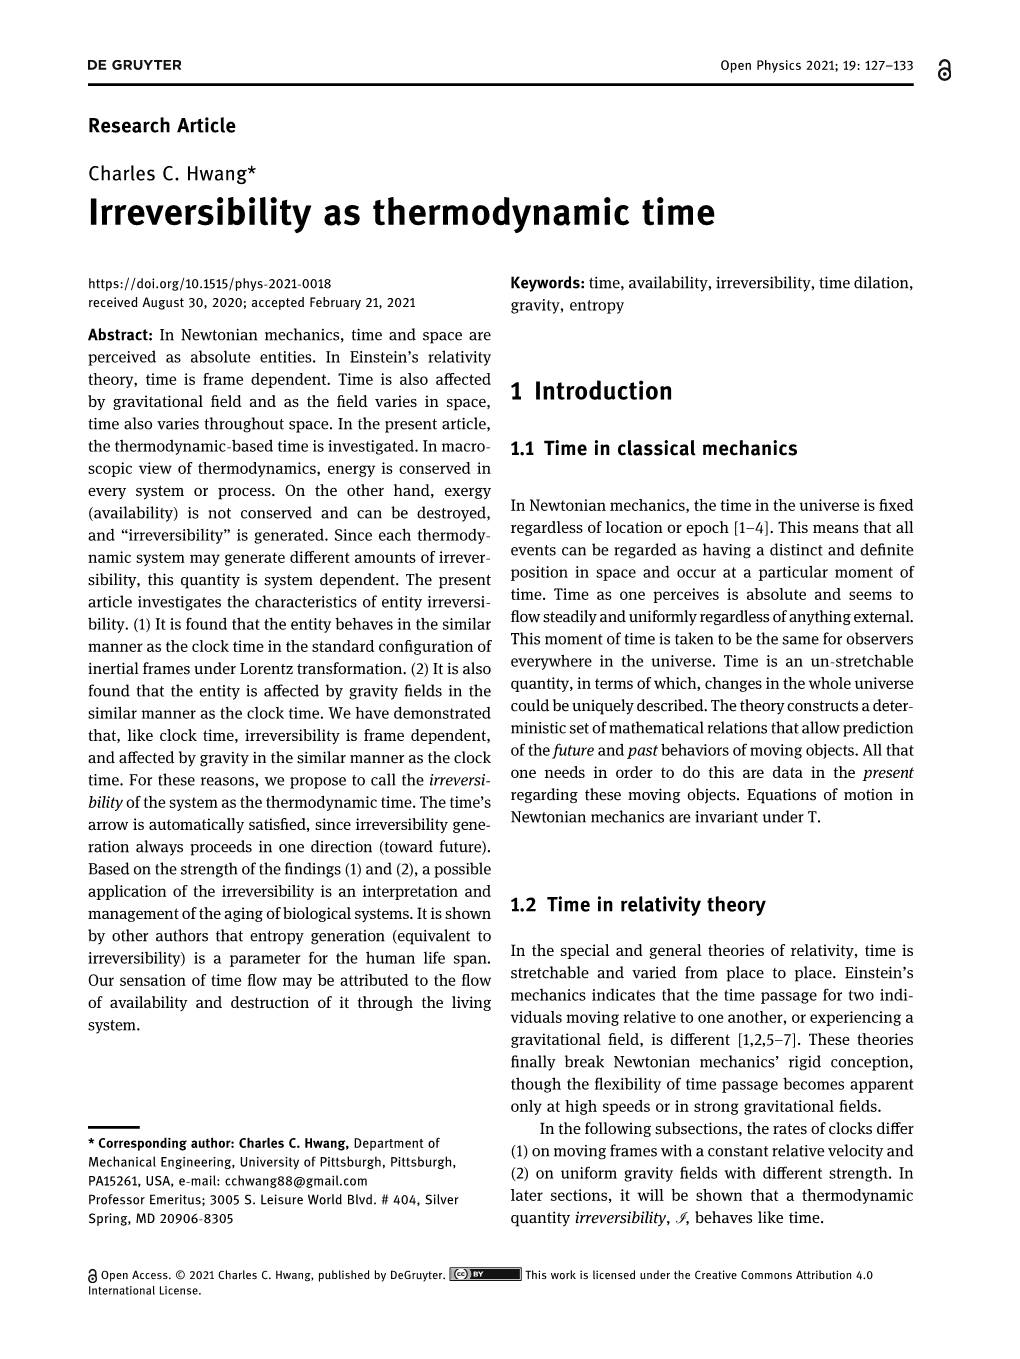 Irreversibility As Thermodynamic Time